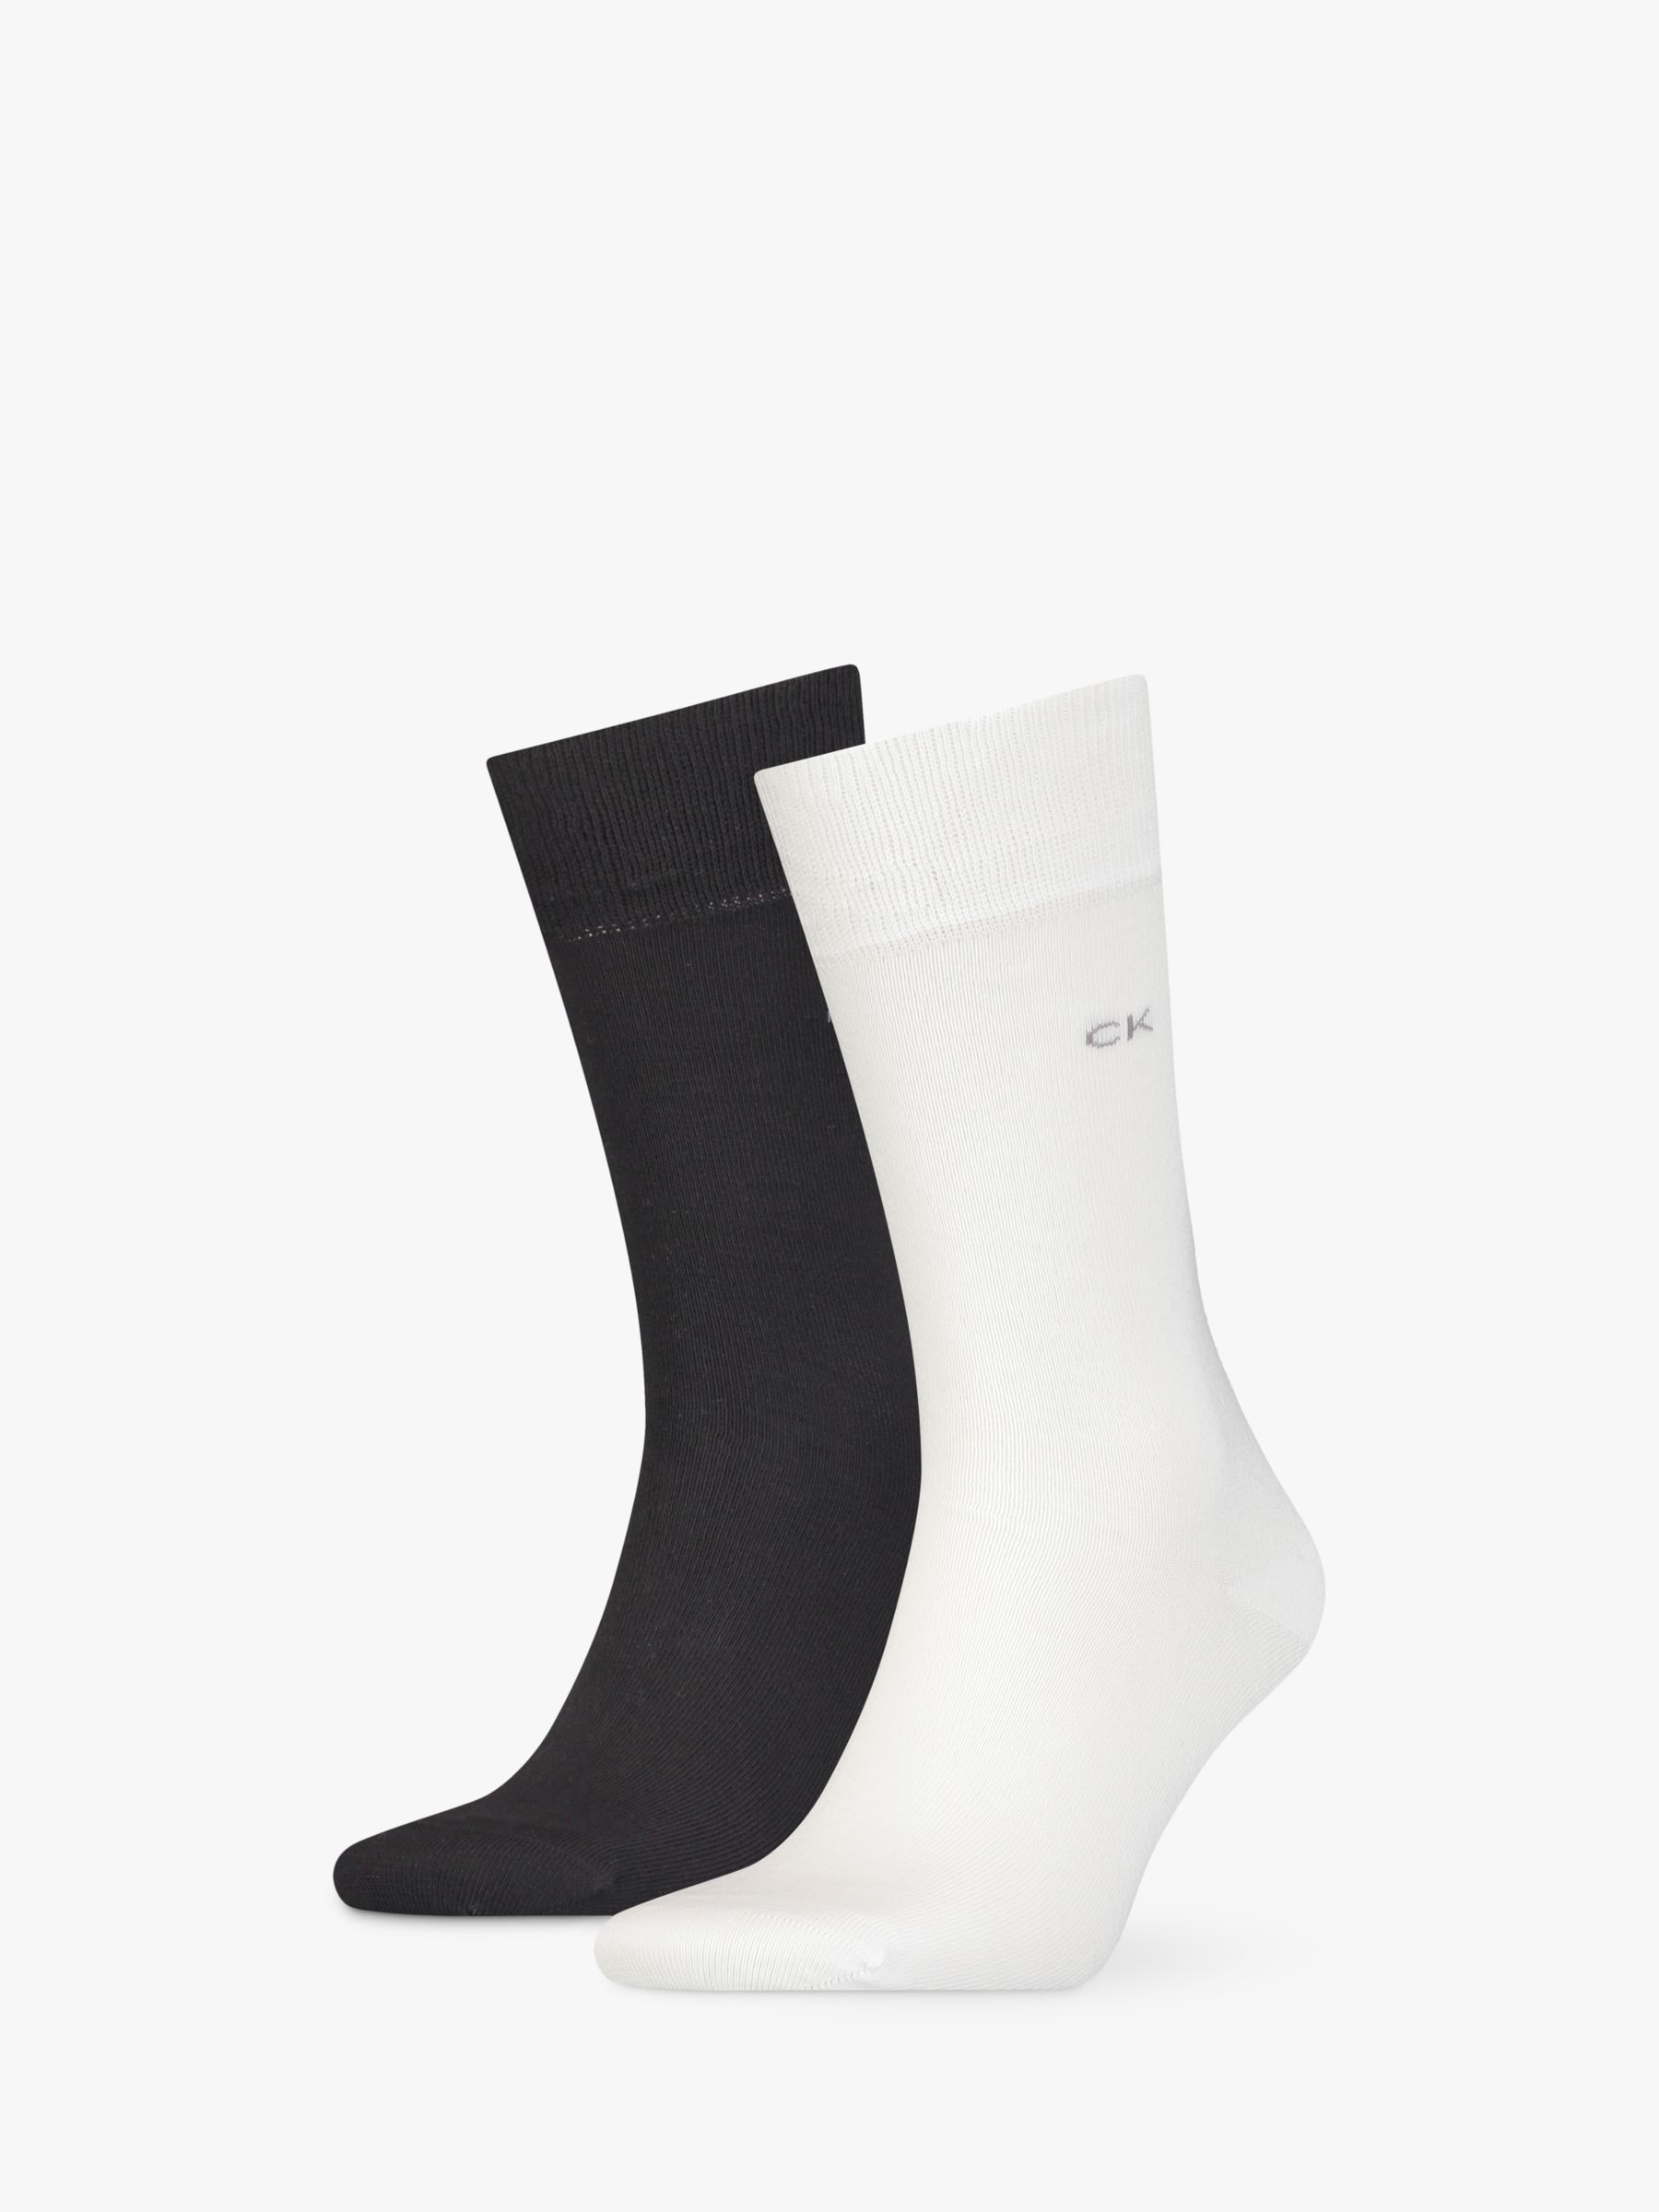 Buy Calvin Klein Flat Knit Cotton Socks, Pack of 2, Black/White Online at johnlewis.com